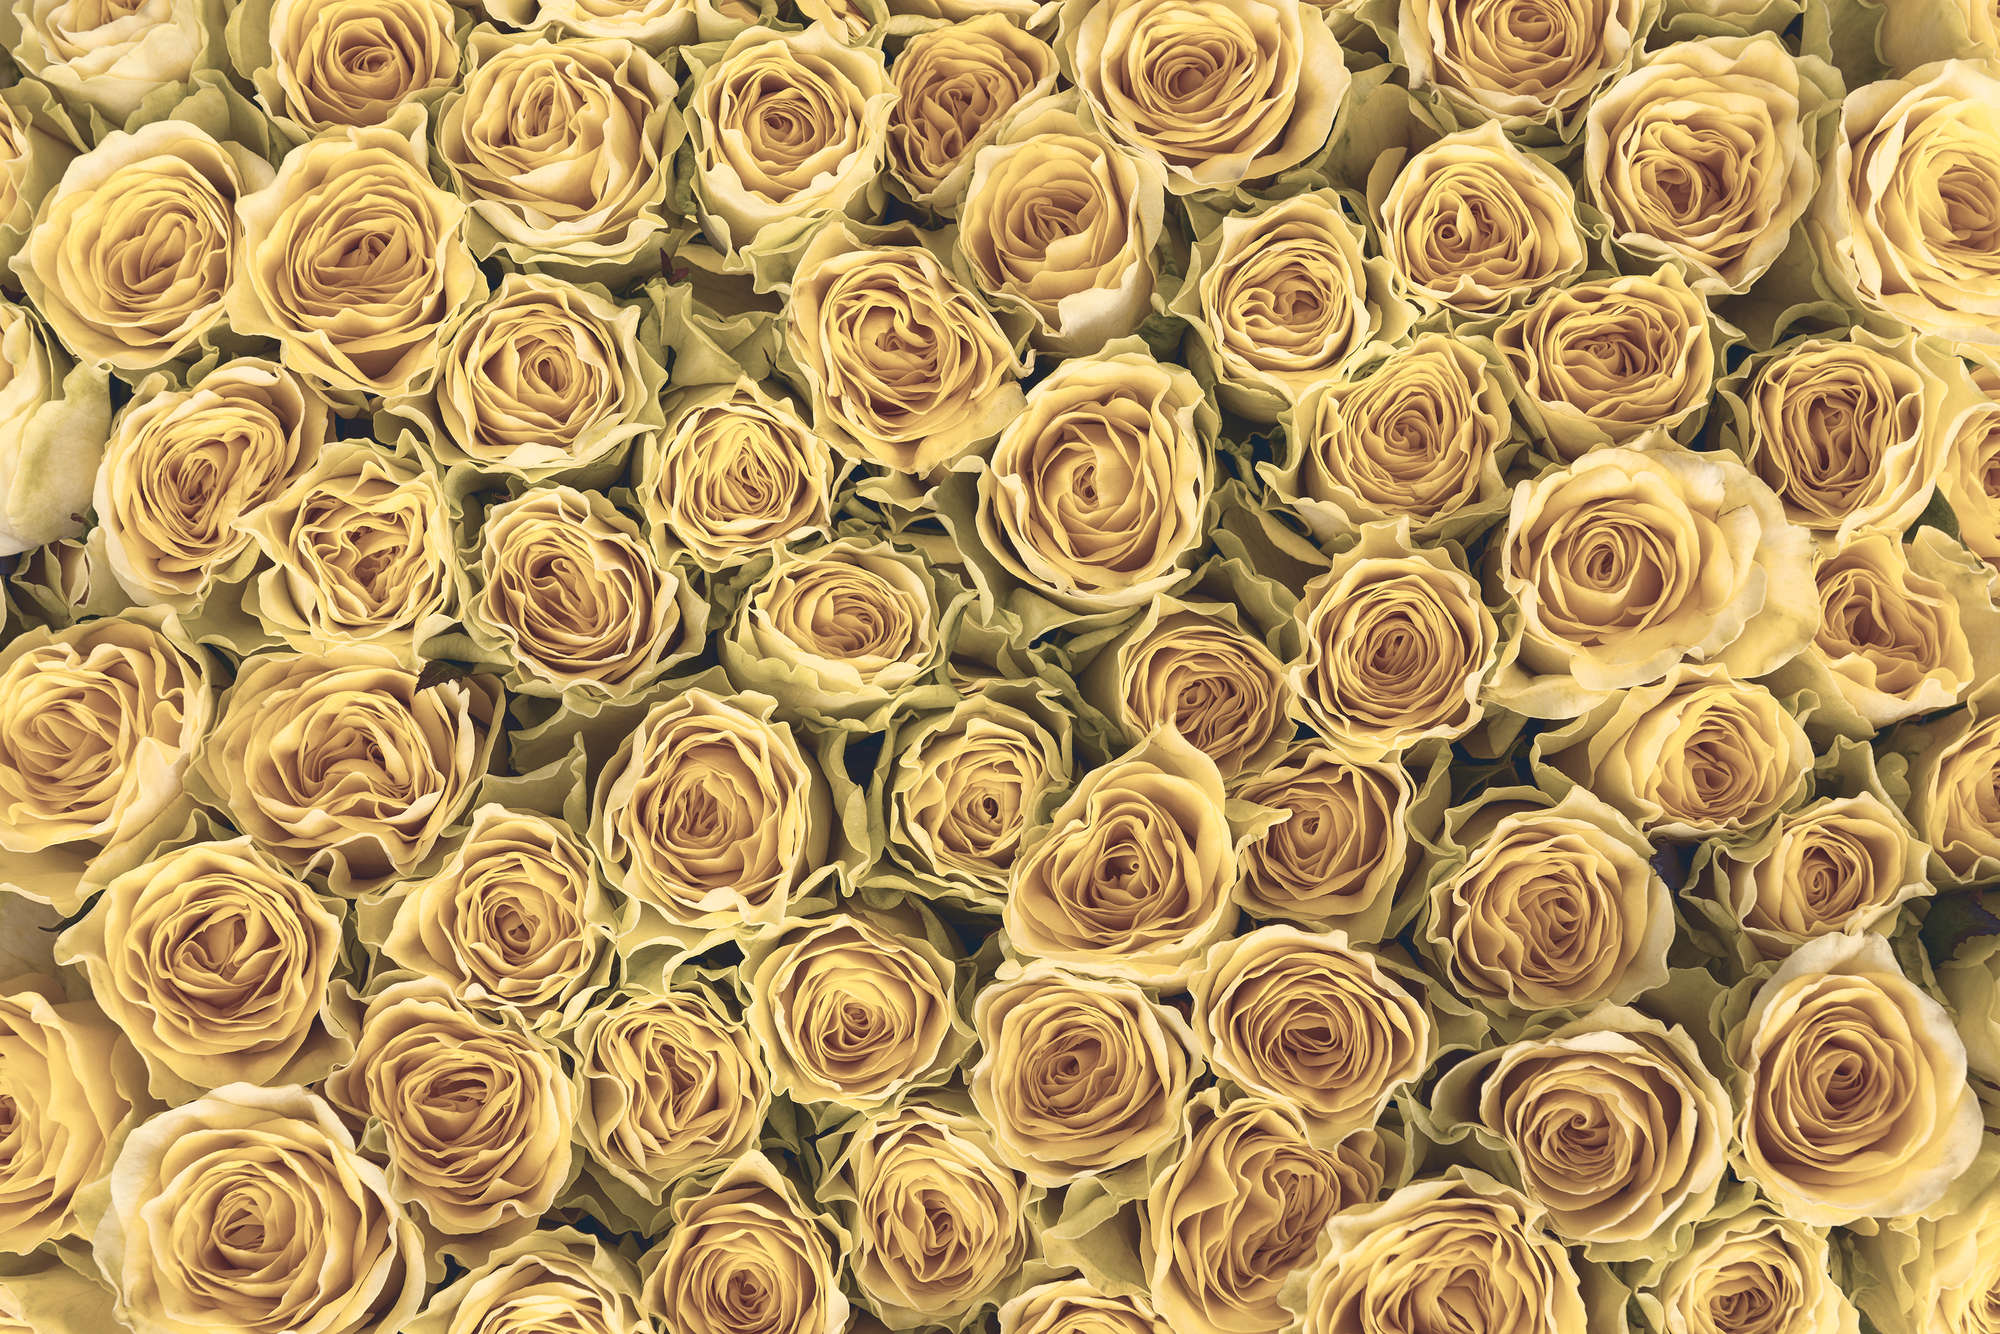             Pflanzen Fototapete goldene Rosen auf Perlmutt Glattvlies
        